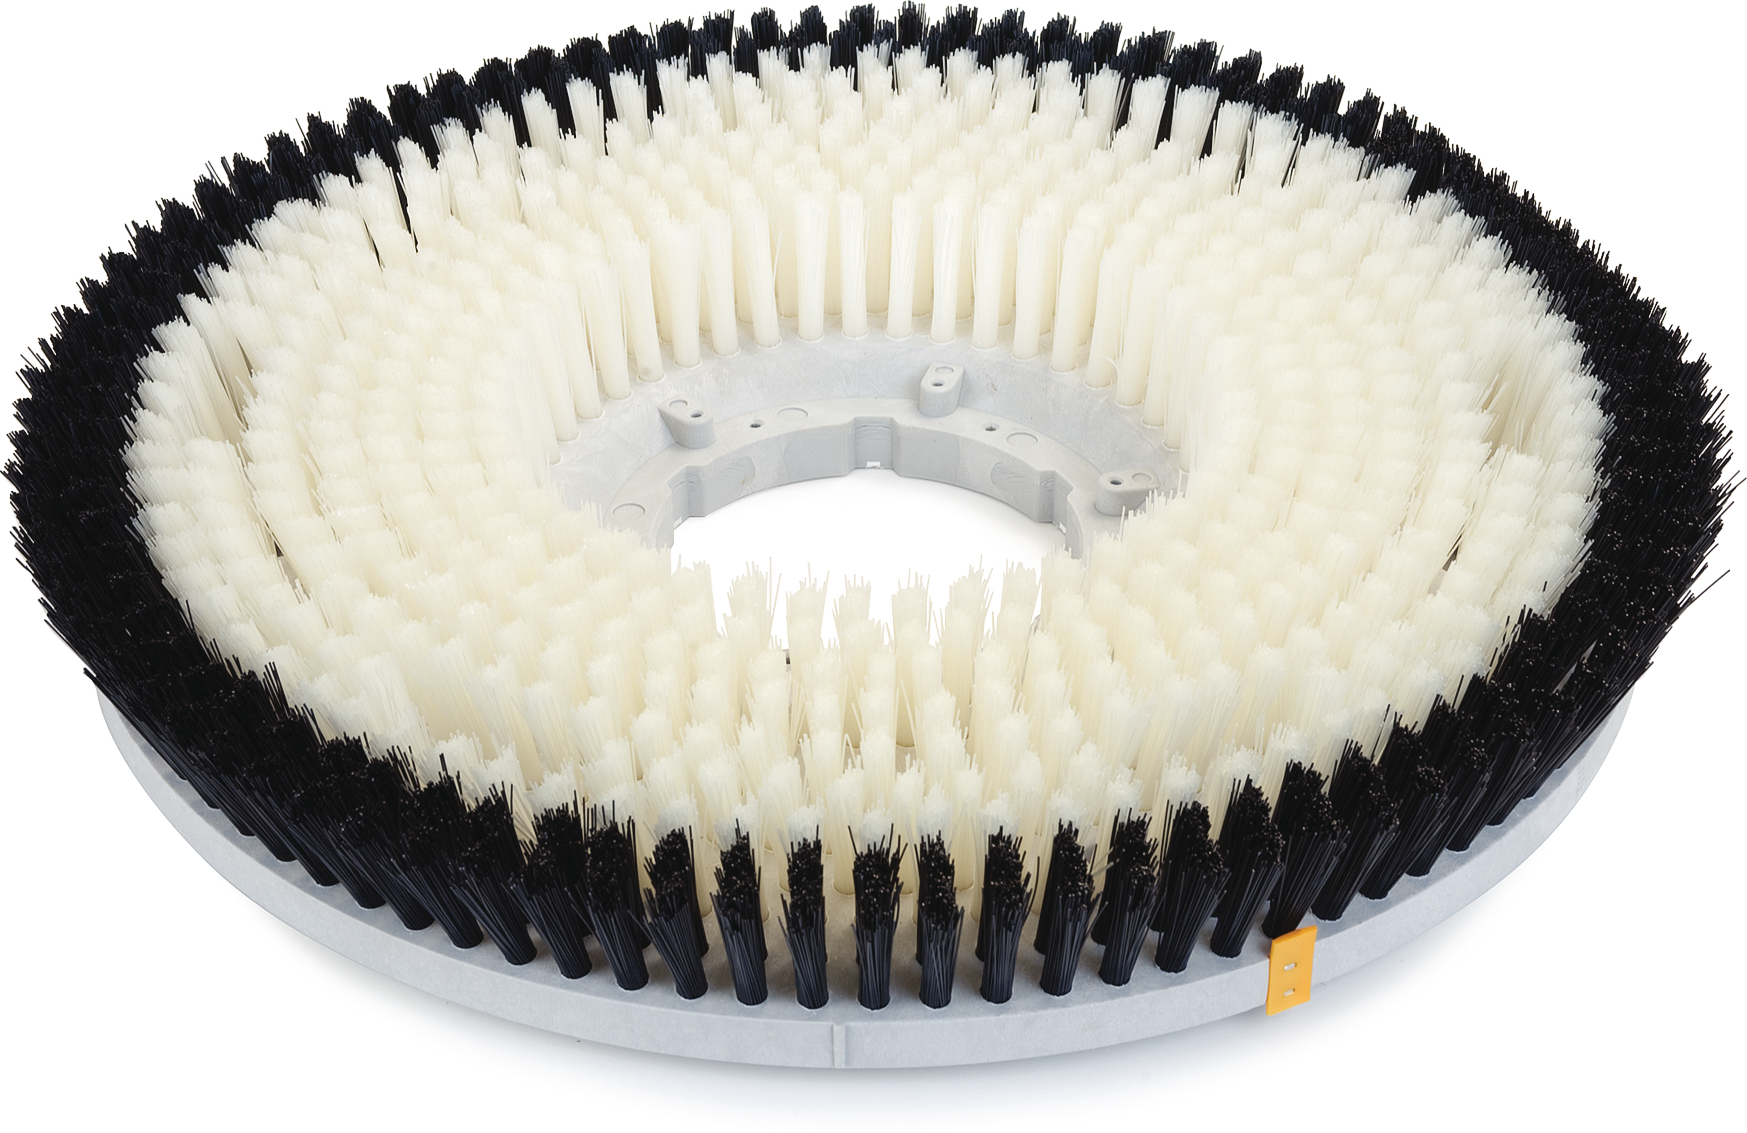 Colortech White-Black Karpet Kare Nylon Brush 19 - White-Black